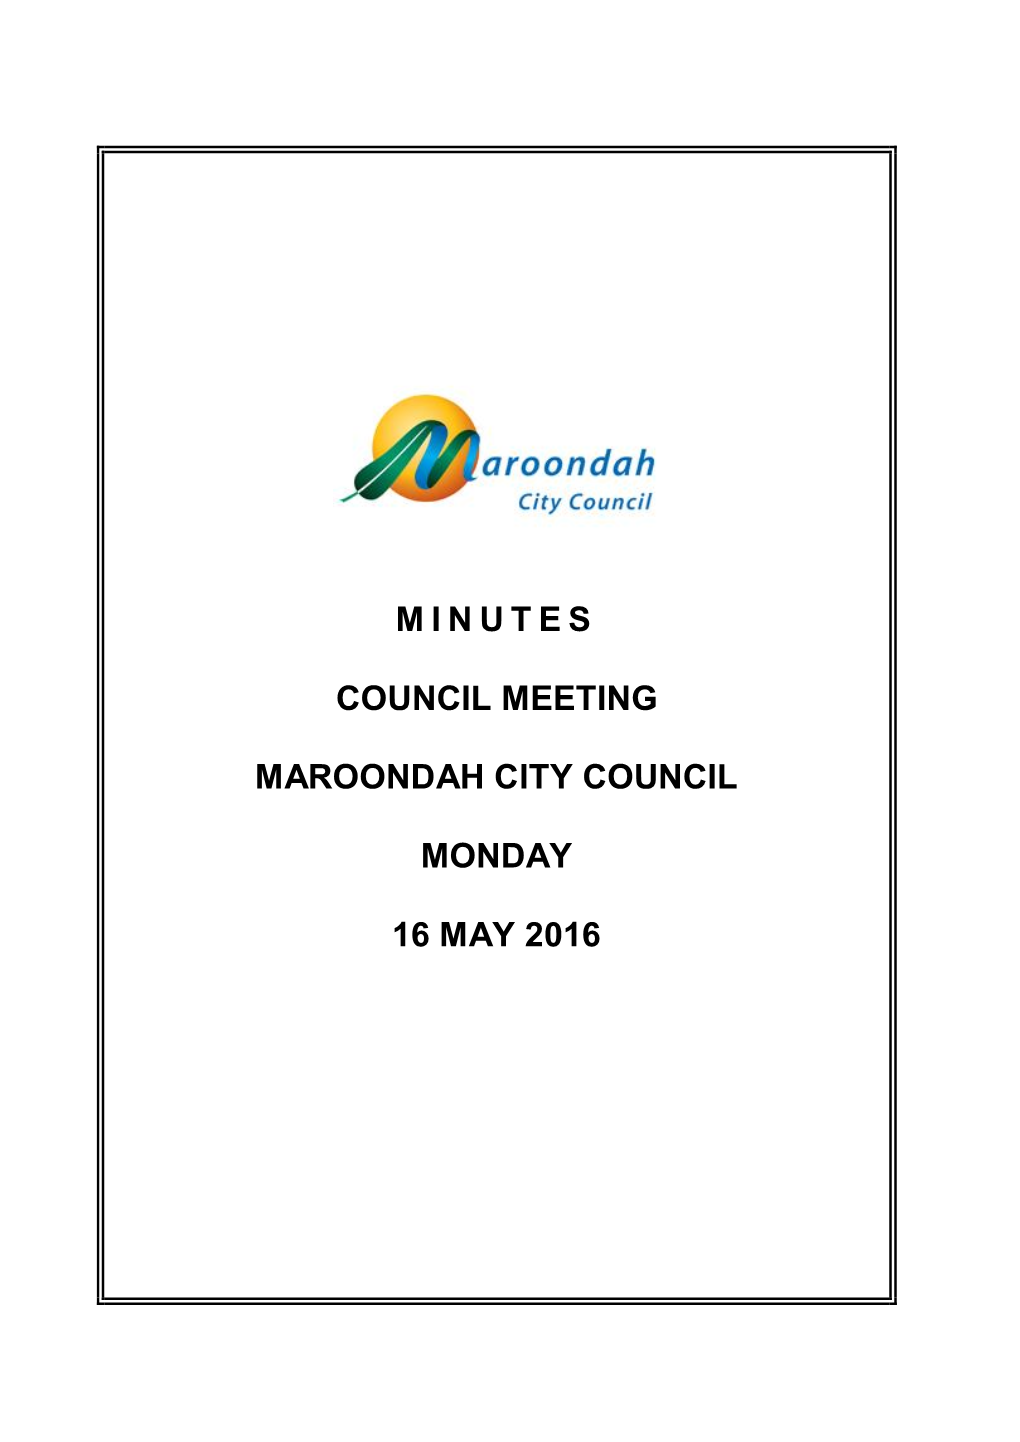 Minutes Council Meeting Maroondah City Council